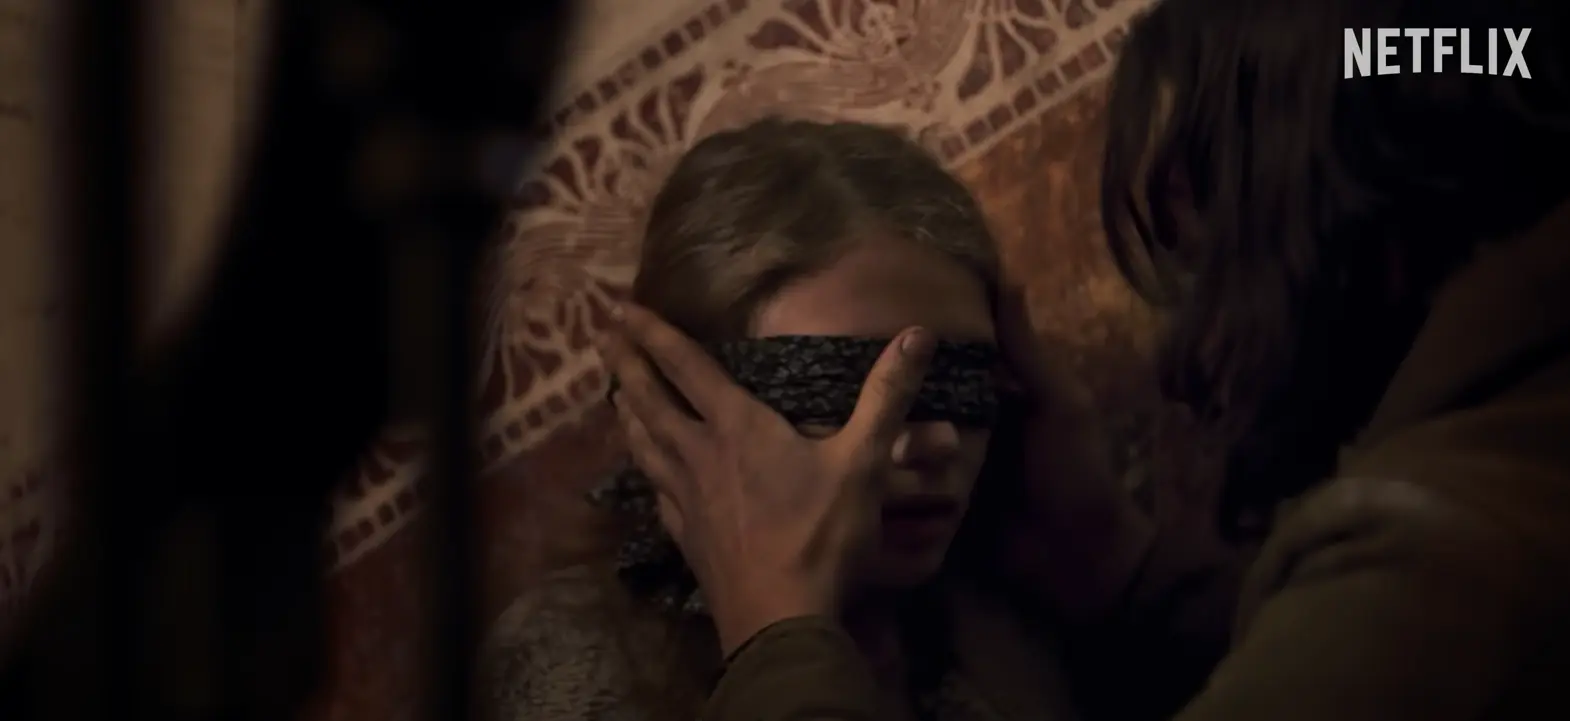 Sebastián blindfolding Sophia